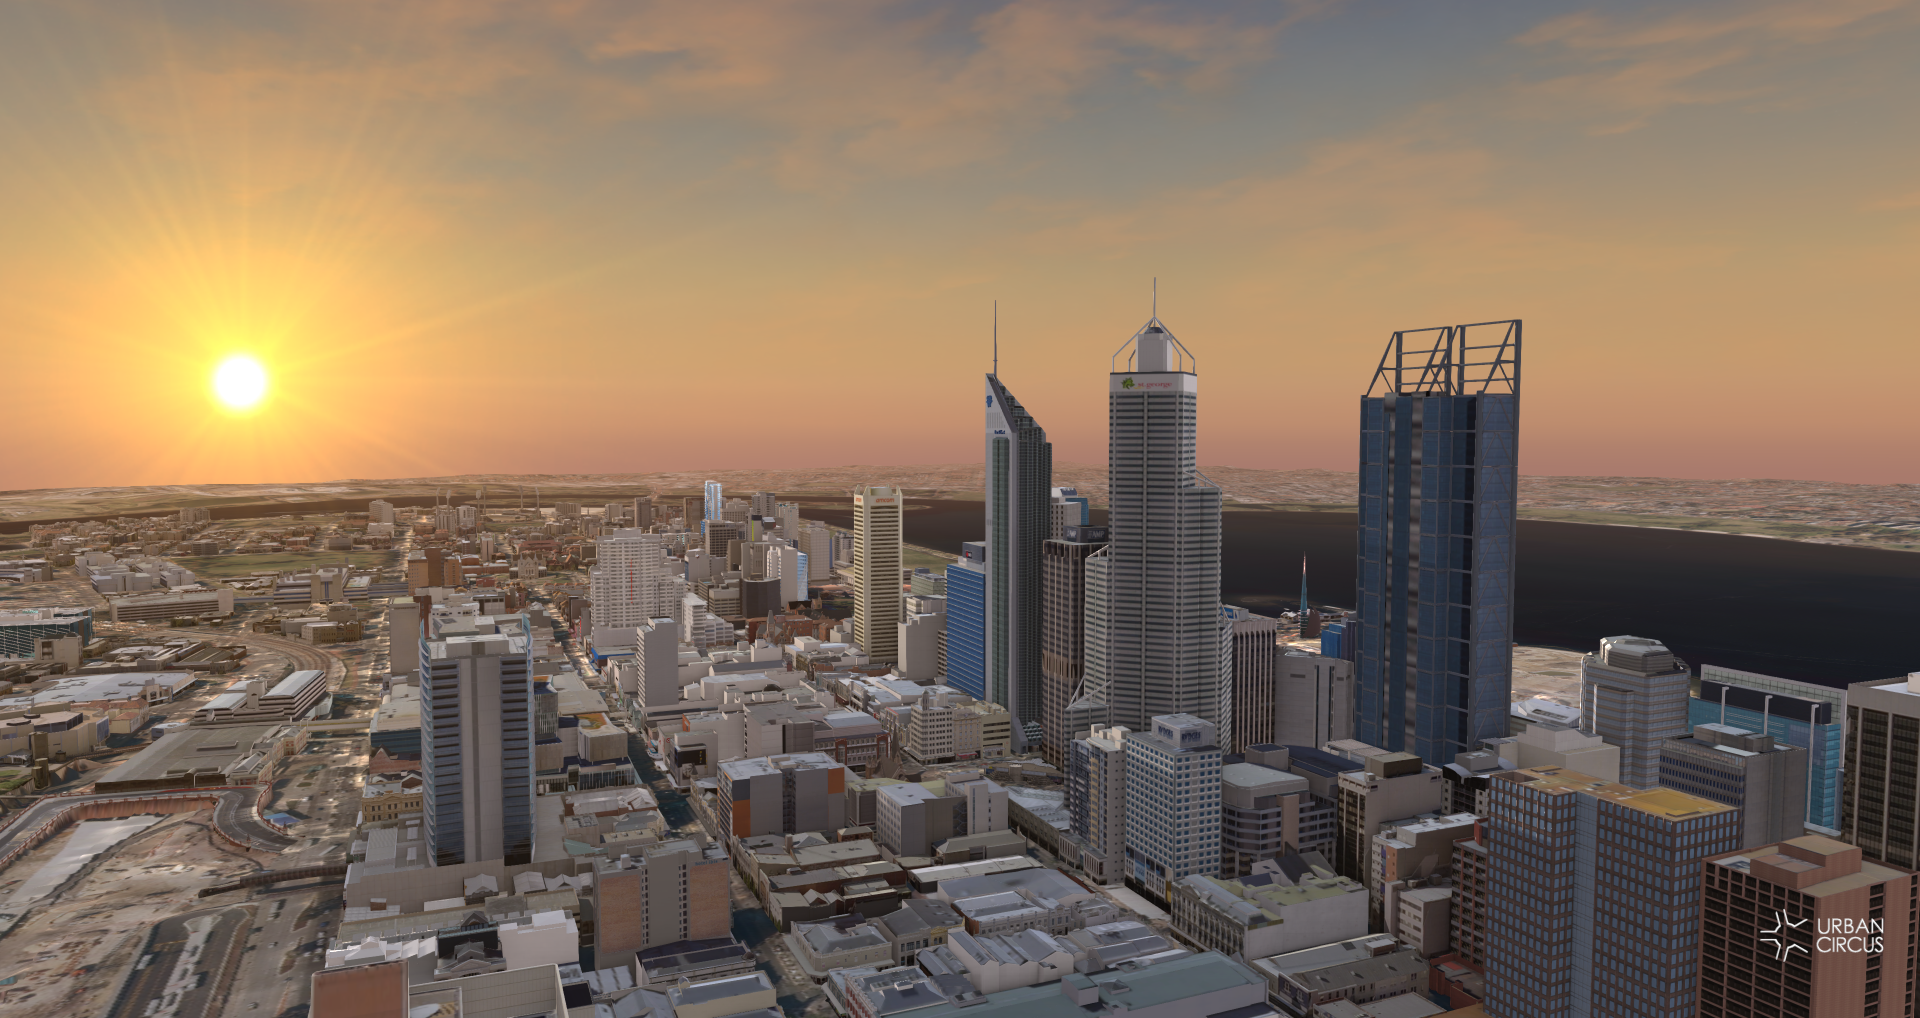 Blog Archive Perth 3D City Model, WA - Urban Circus